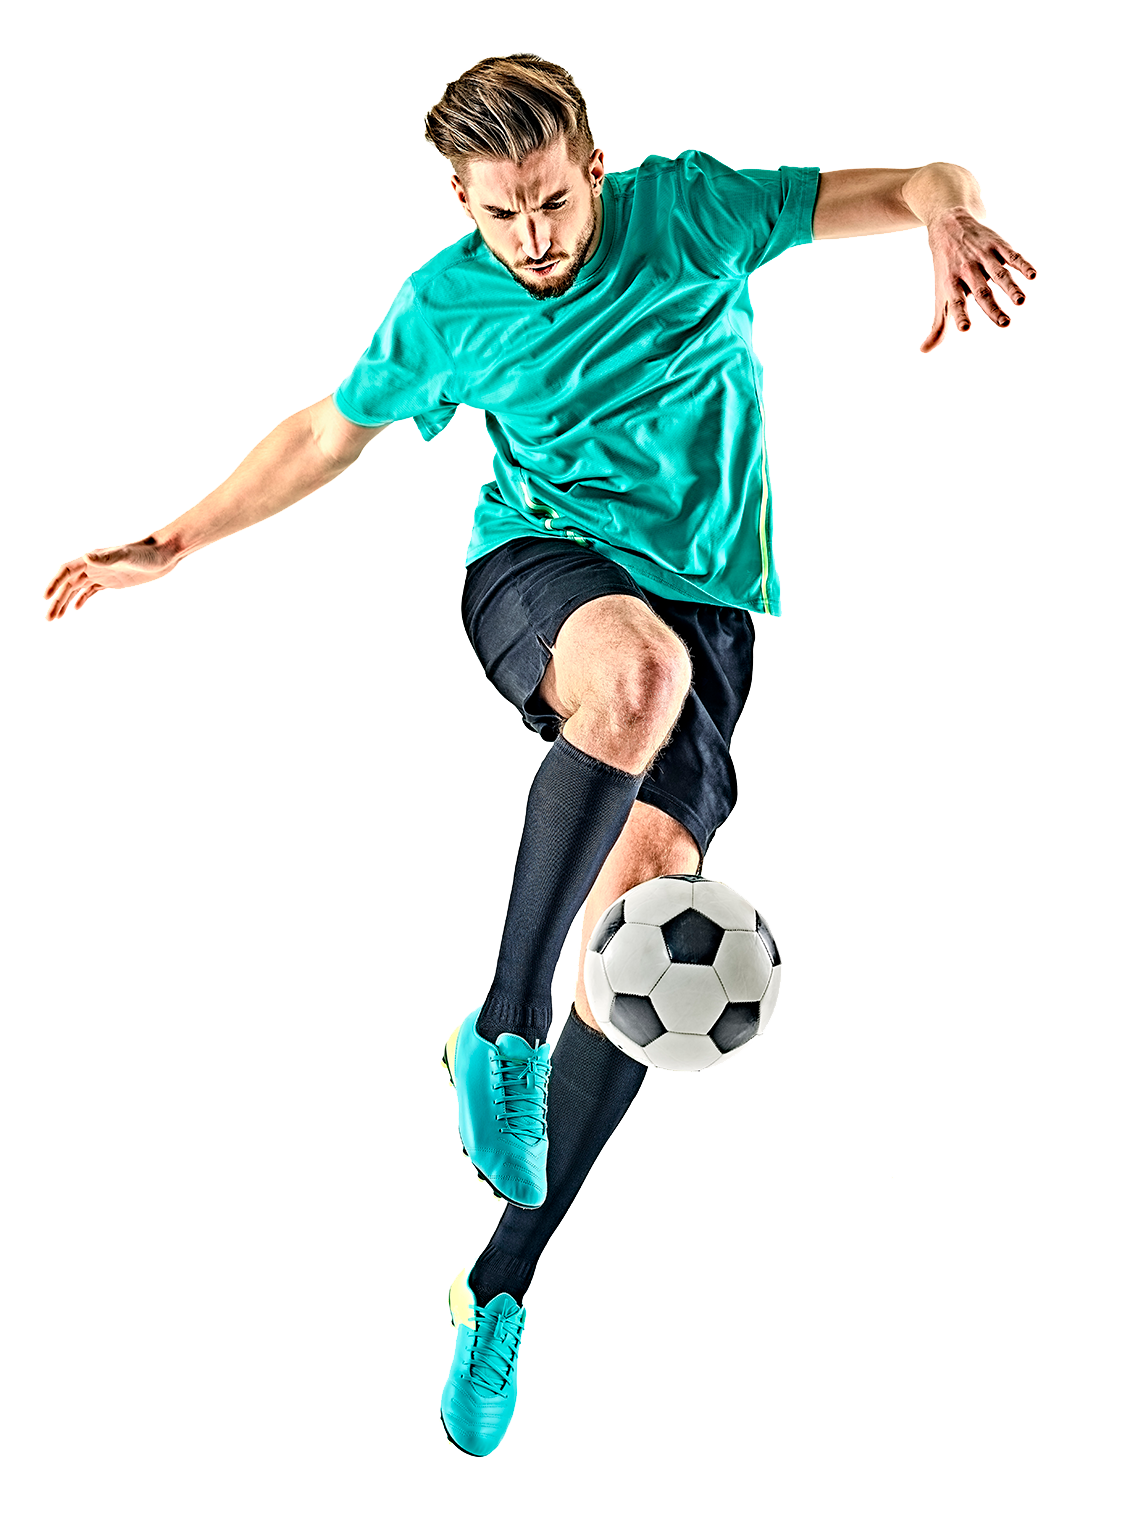 Footballer Player PNG HD Image